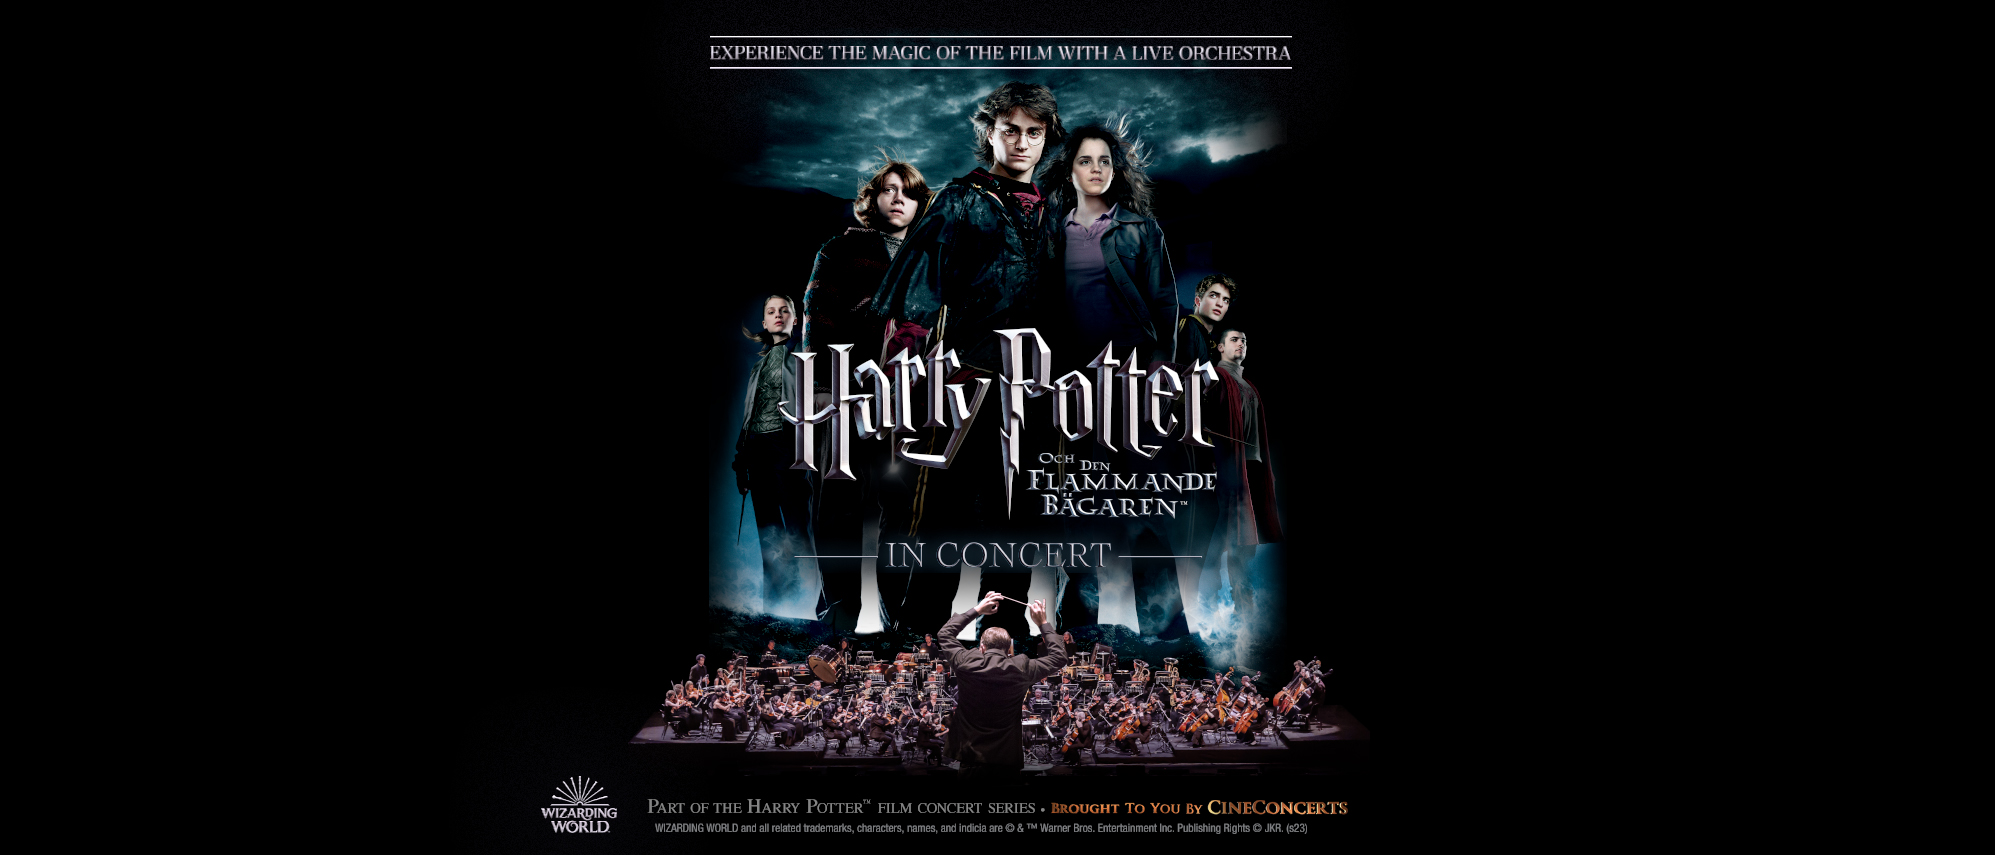 Filmomslag till Harry Potter med en stor symfoniorkester i nederkant.